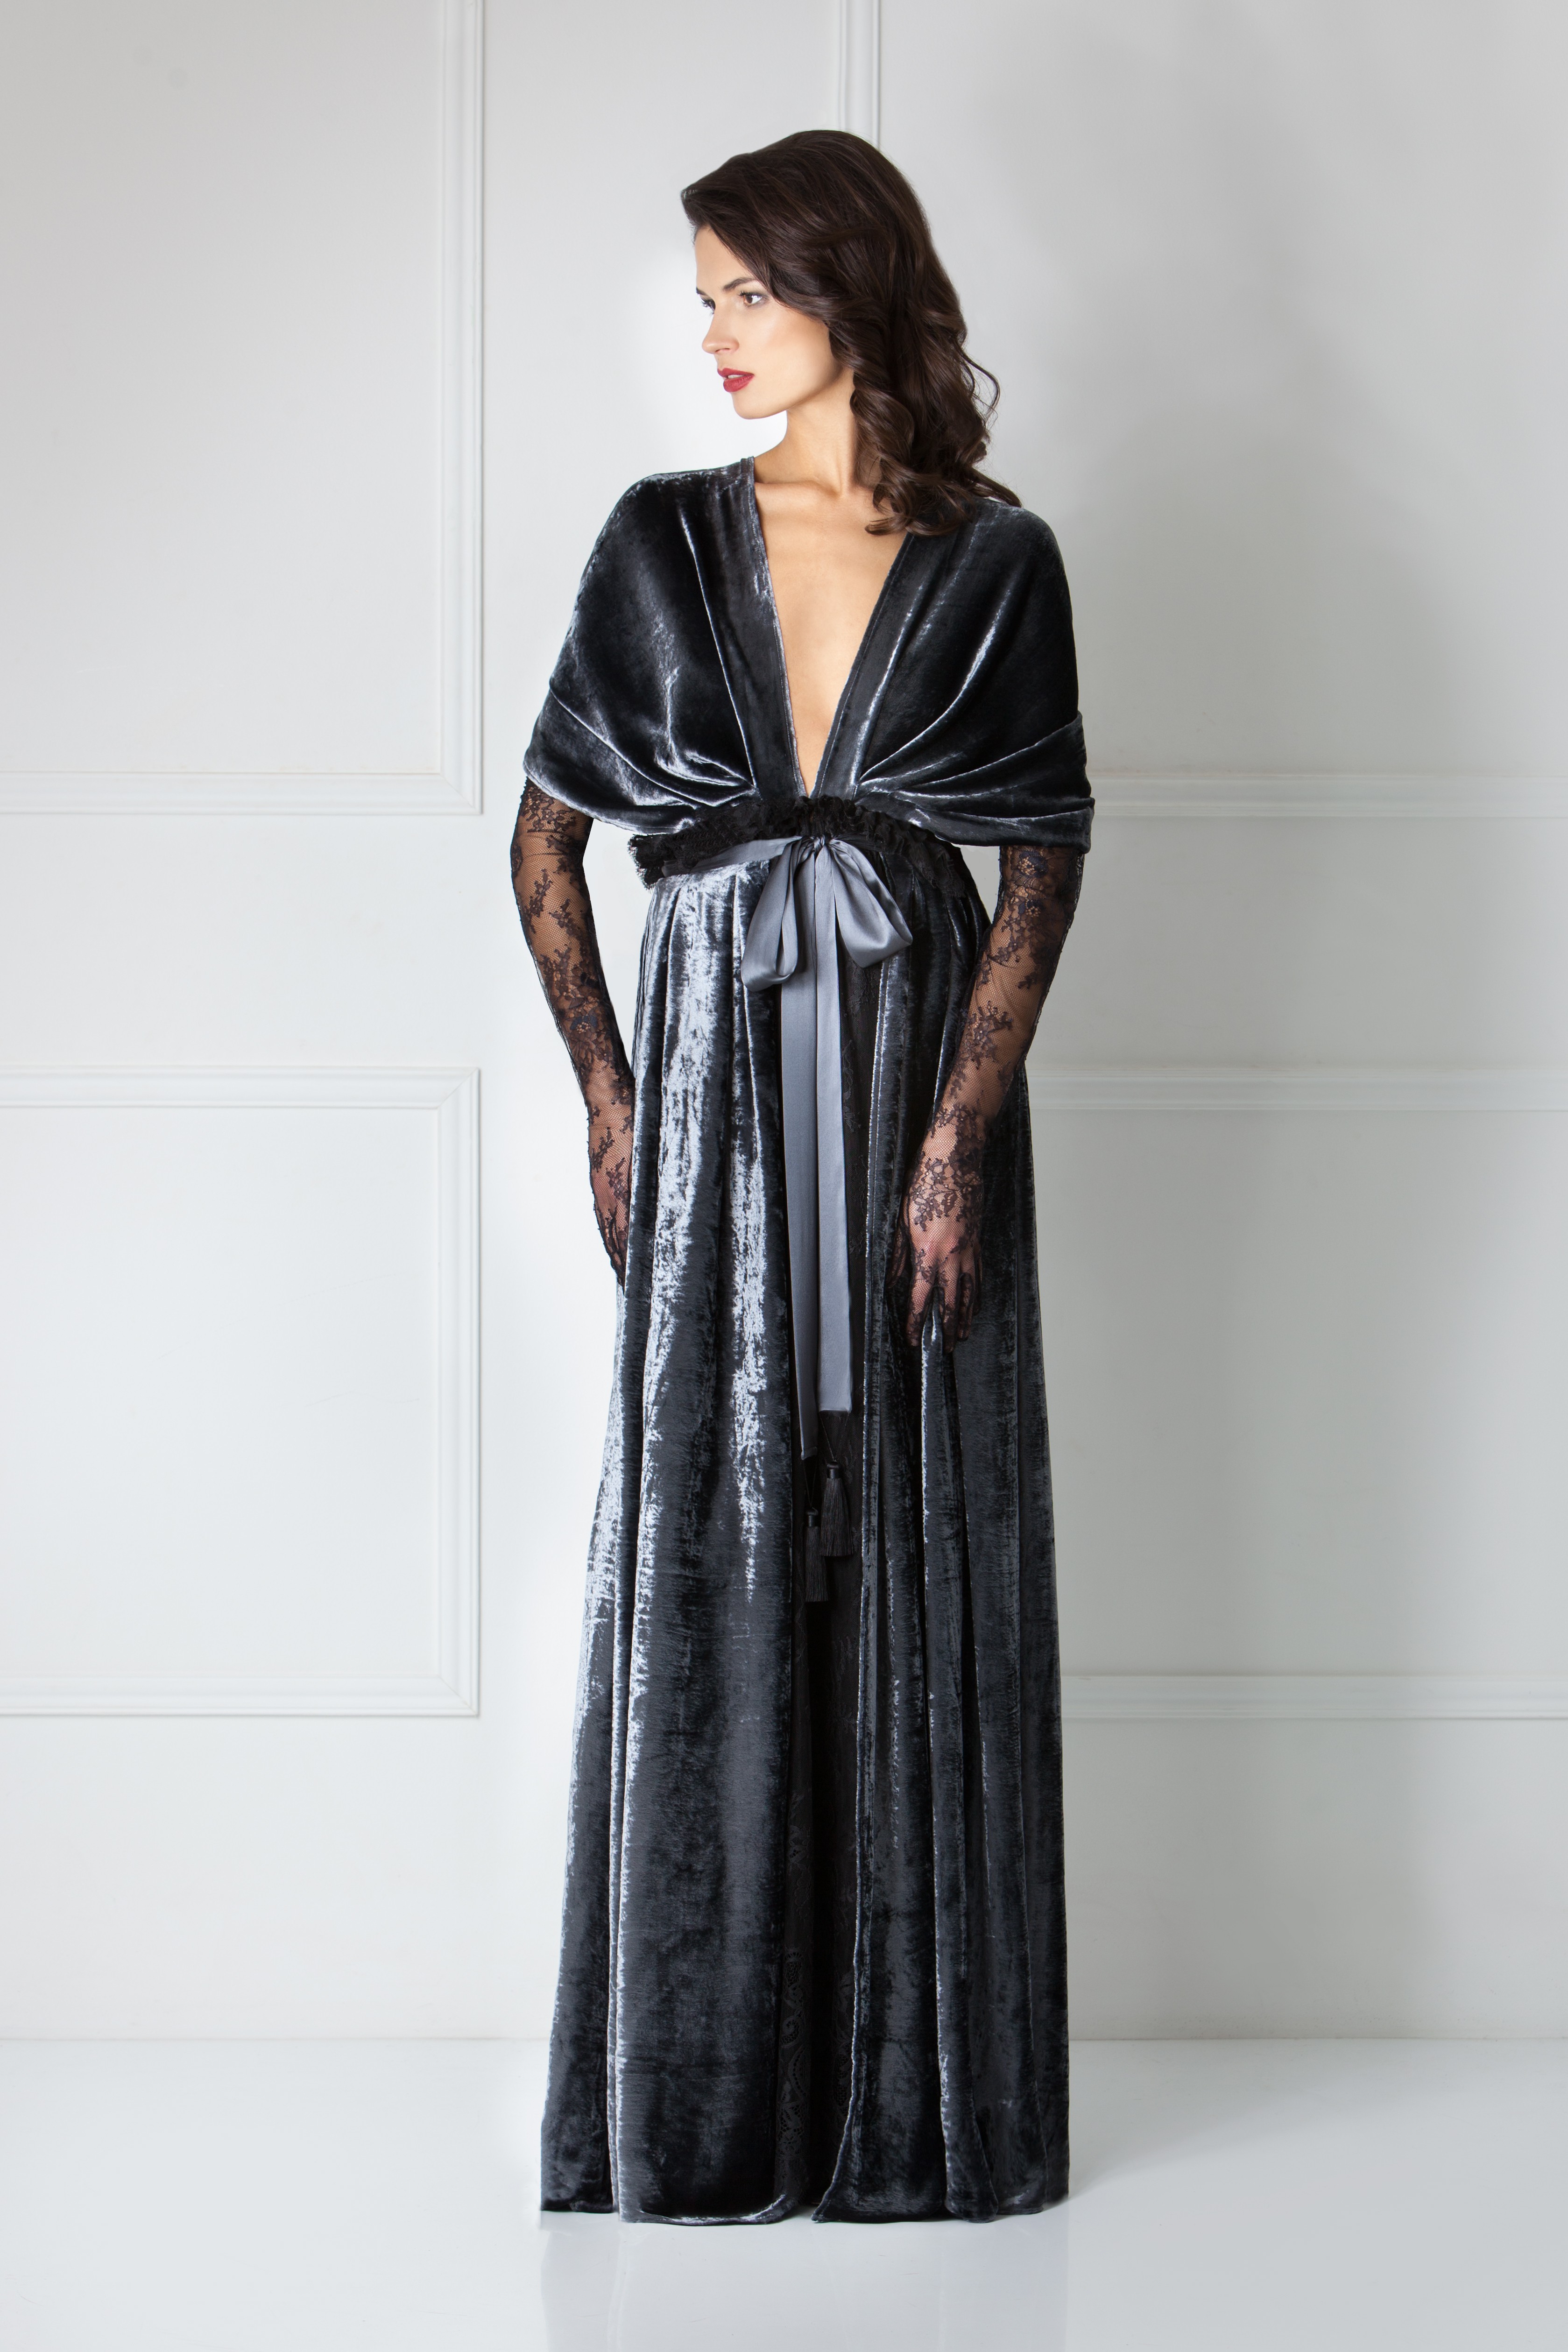 Будуарное платье из бархата из серии Wild Roses от Amoralle, €1,550